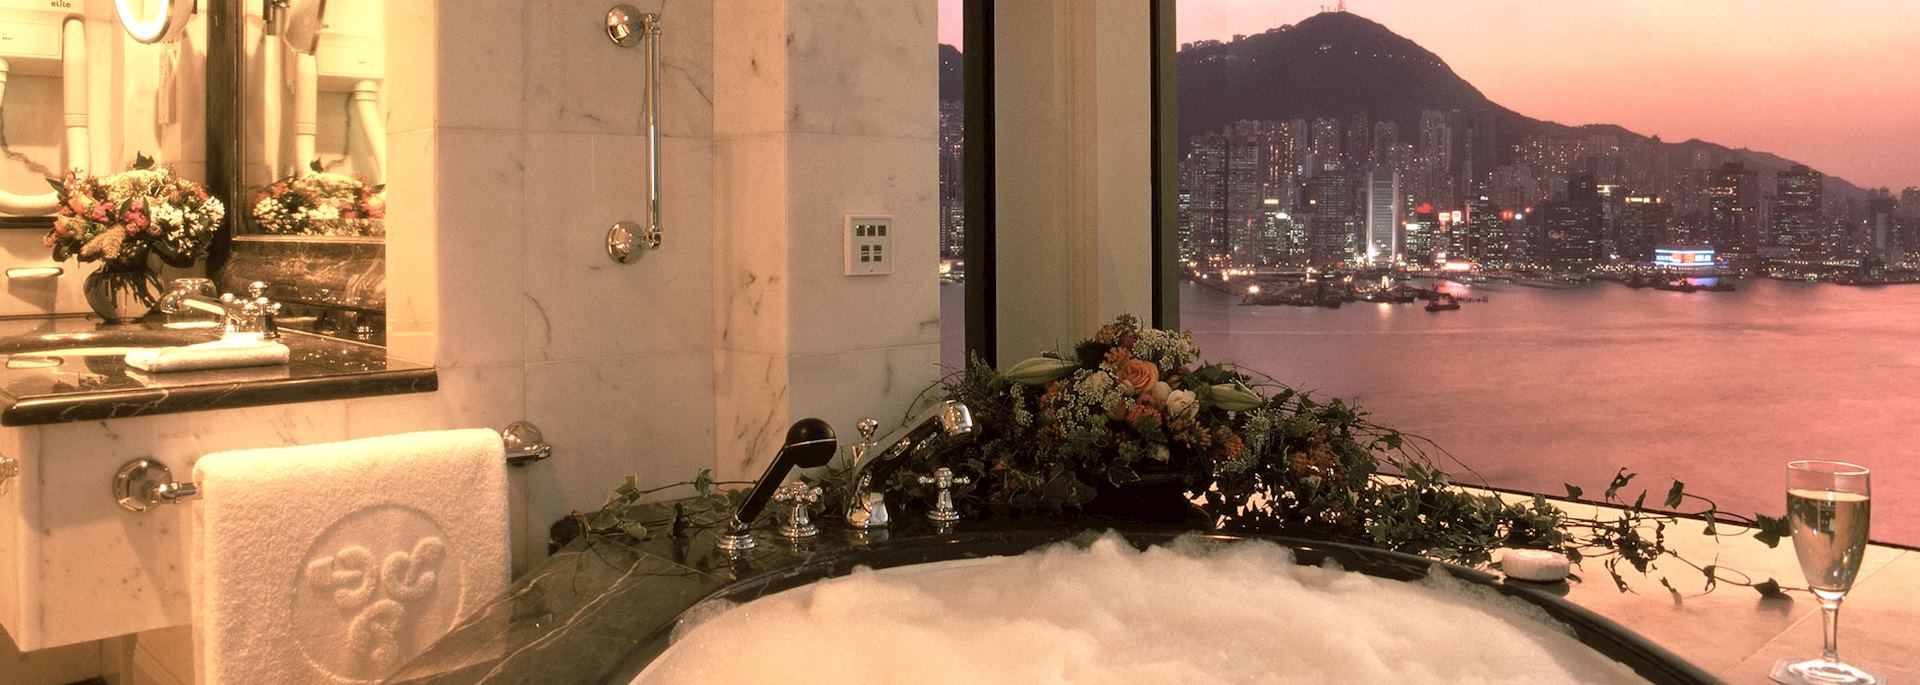 Bathroom Suite, Peninsula Hotel, Hong Kong